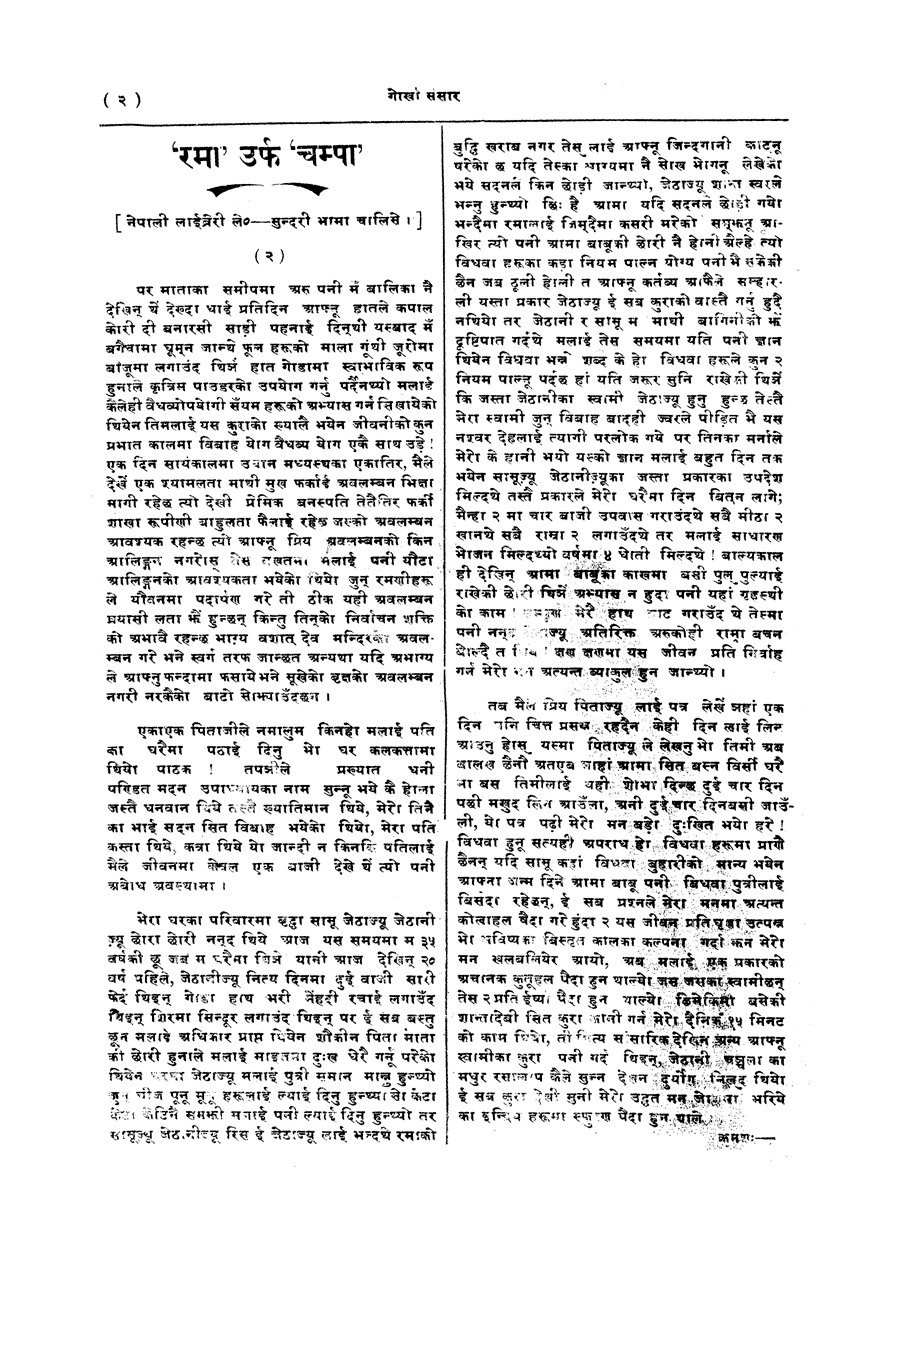 Gorkha Sansar, 6 Mar 1928, page 2